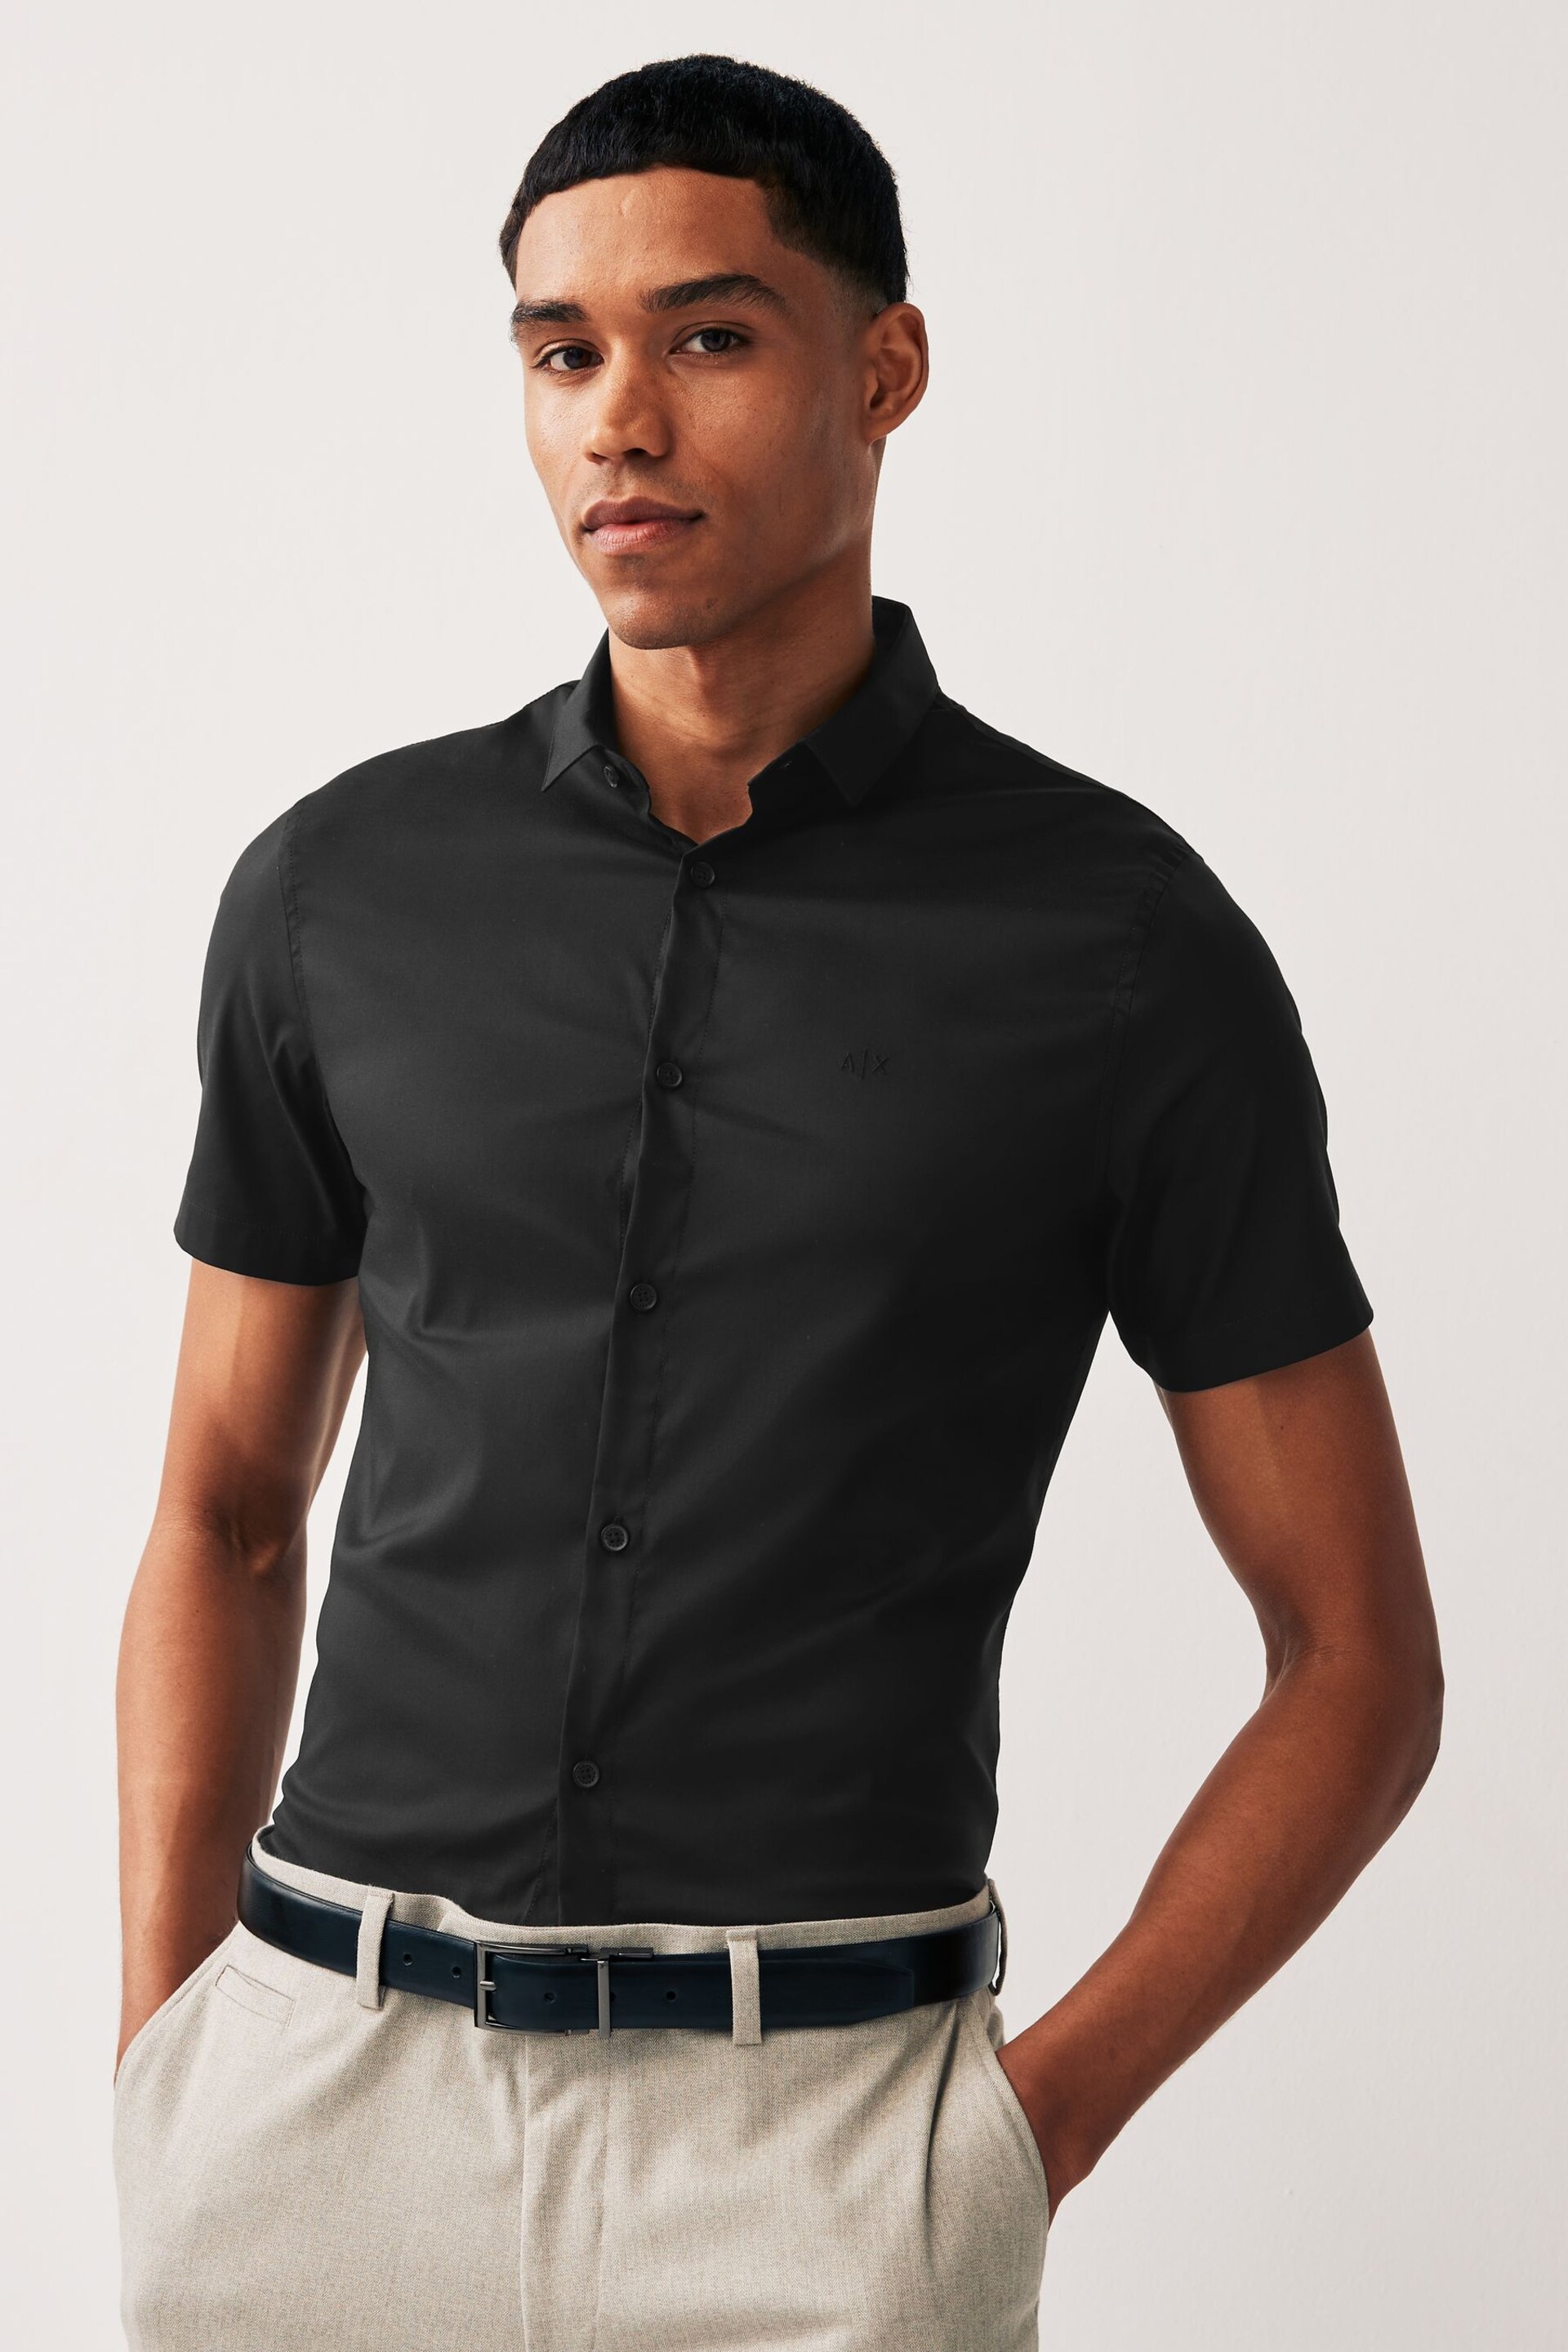 Armani Exchange Stretch Short Sleeve Black Shirt - Image 1 of 4